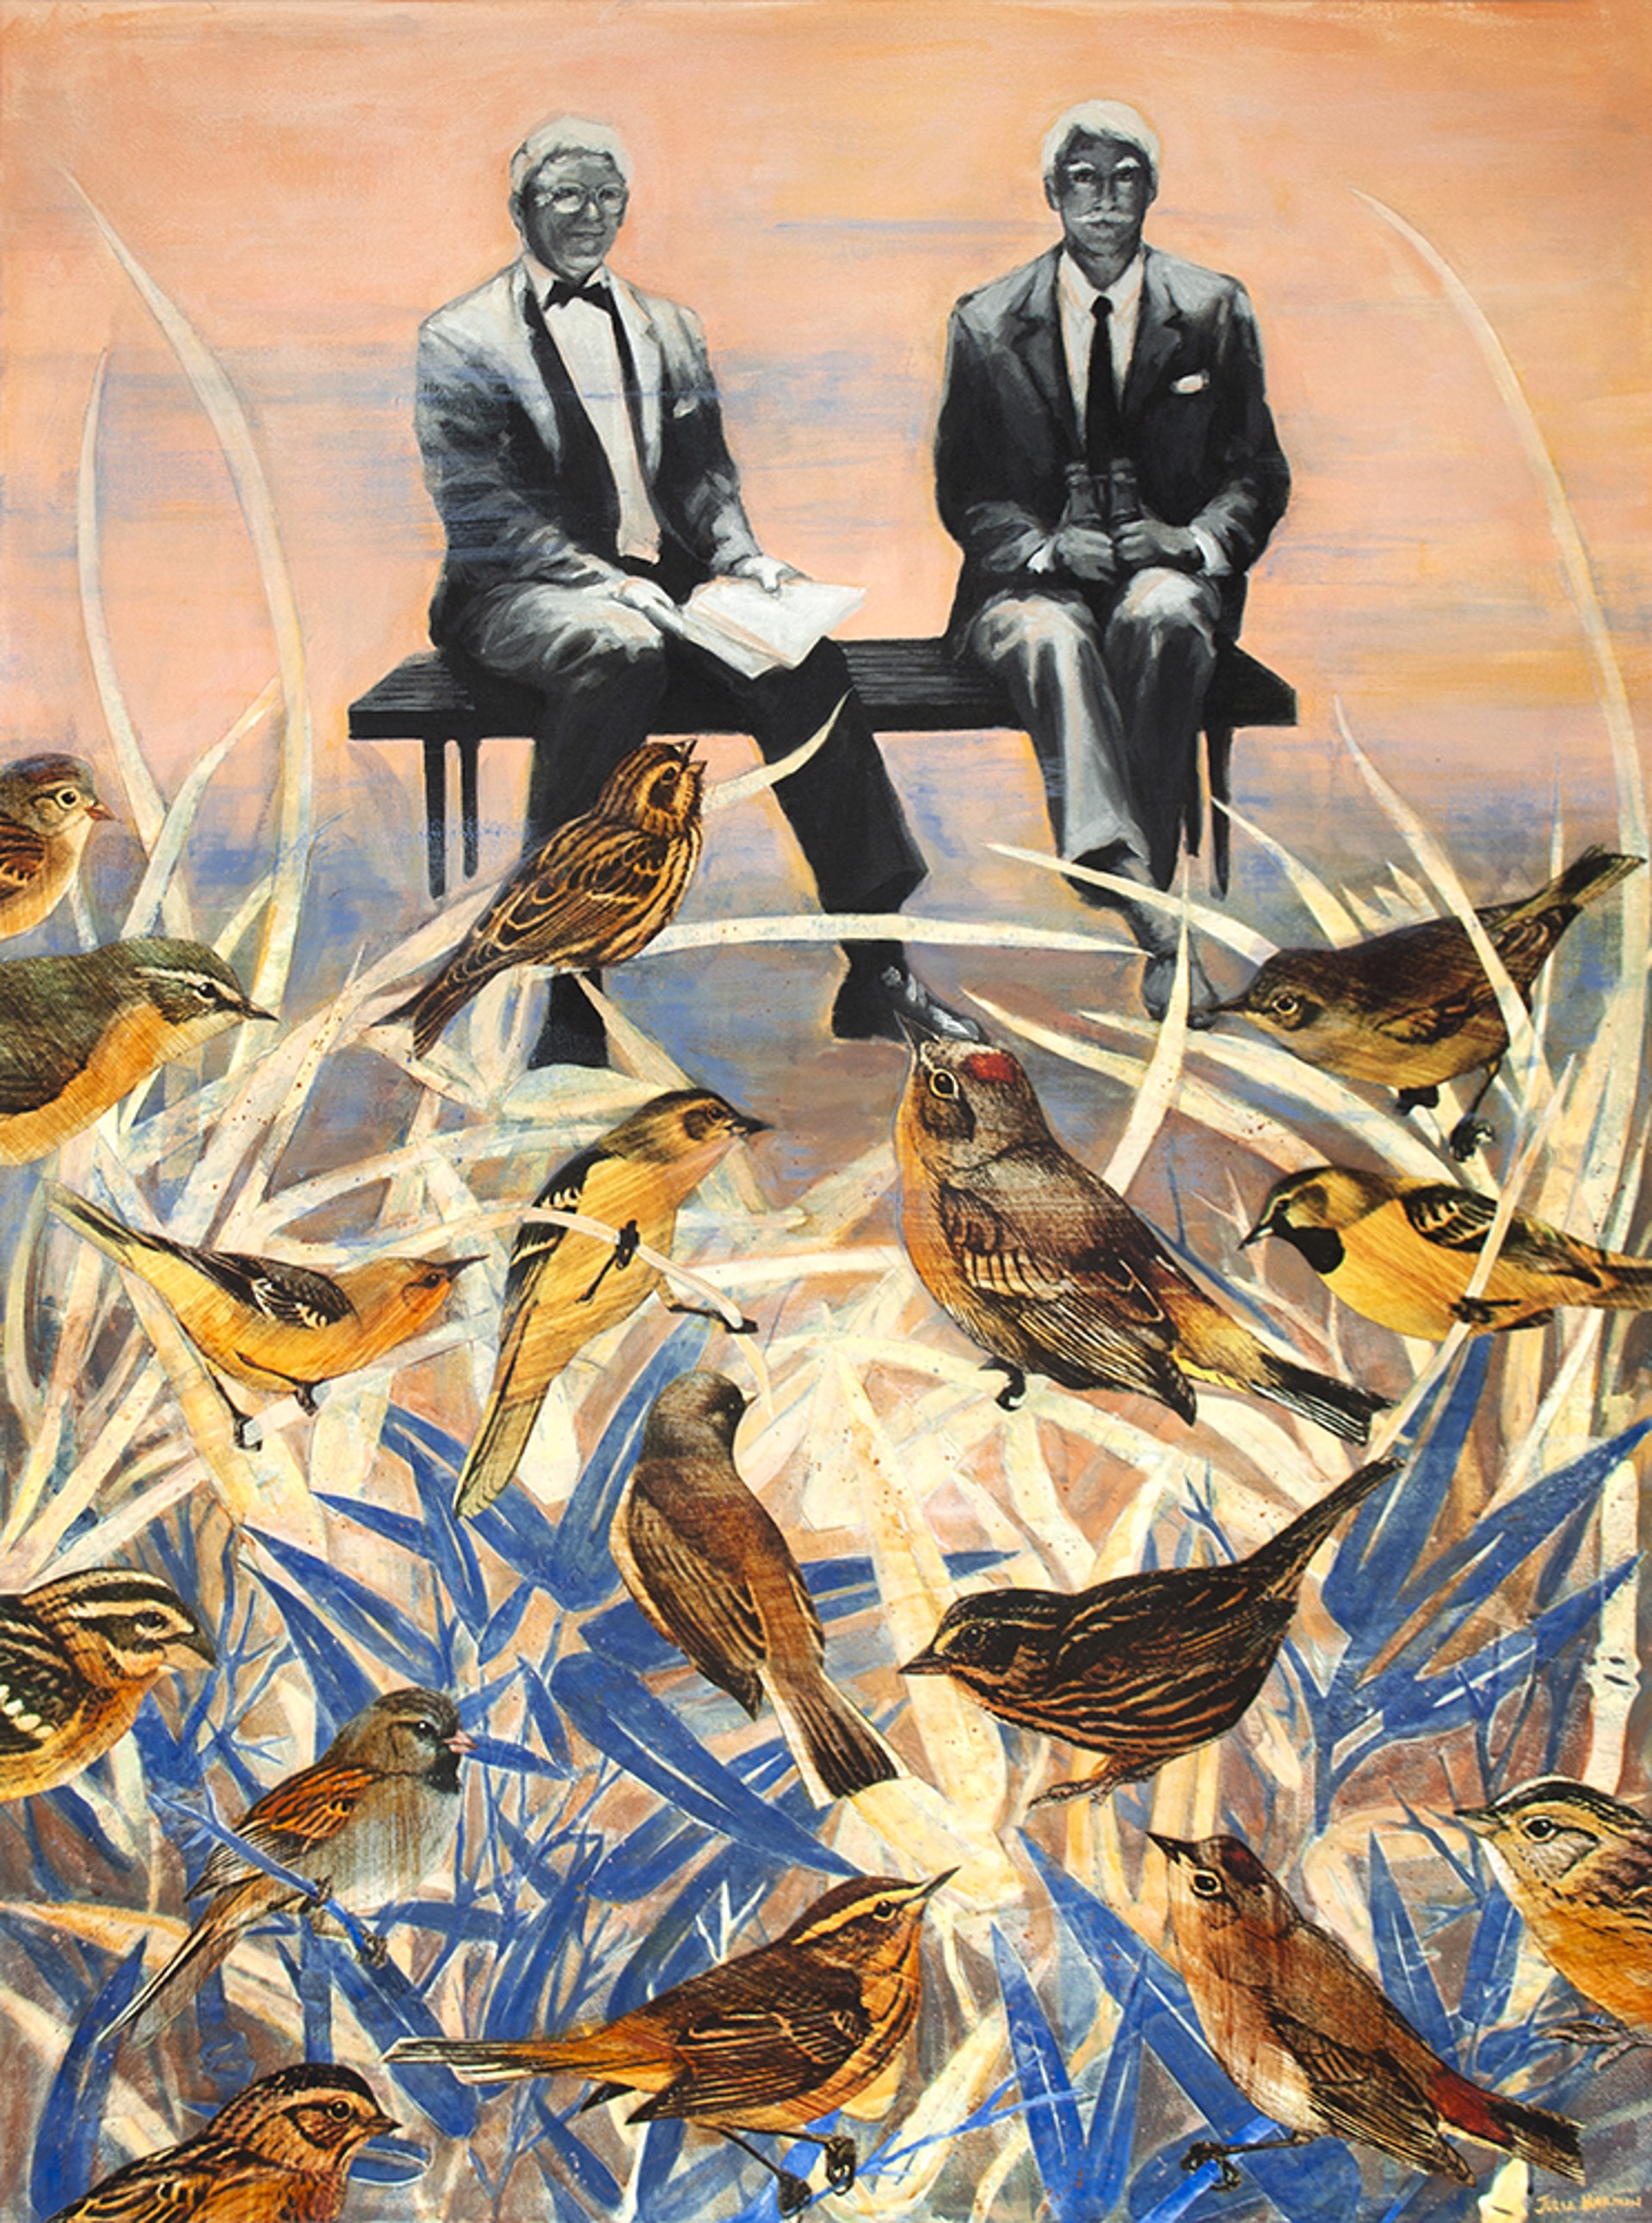 The Ornithologists by Julia Harmon